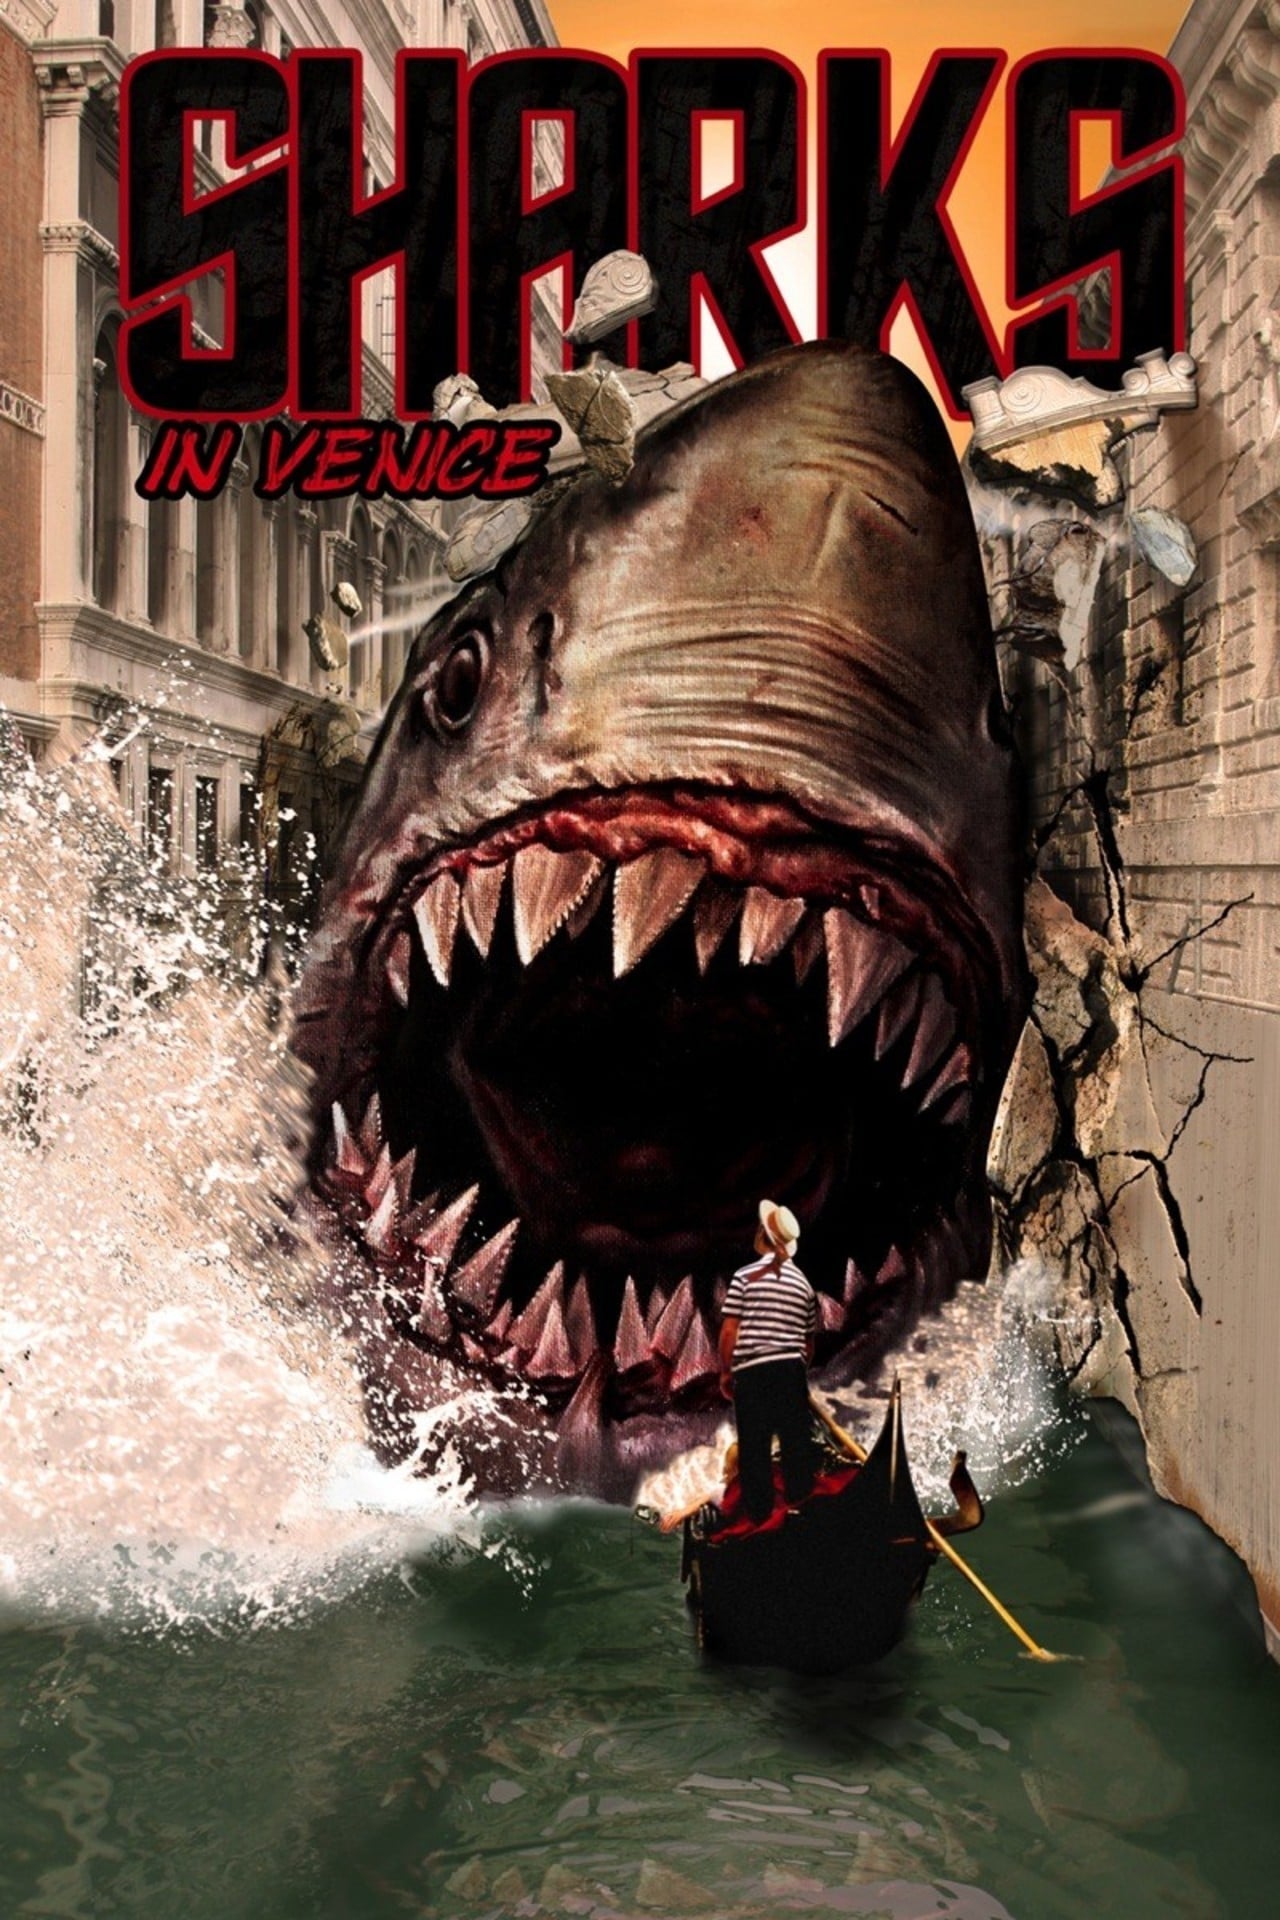 Shark in Venice film